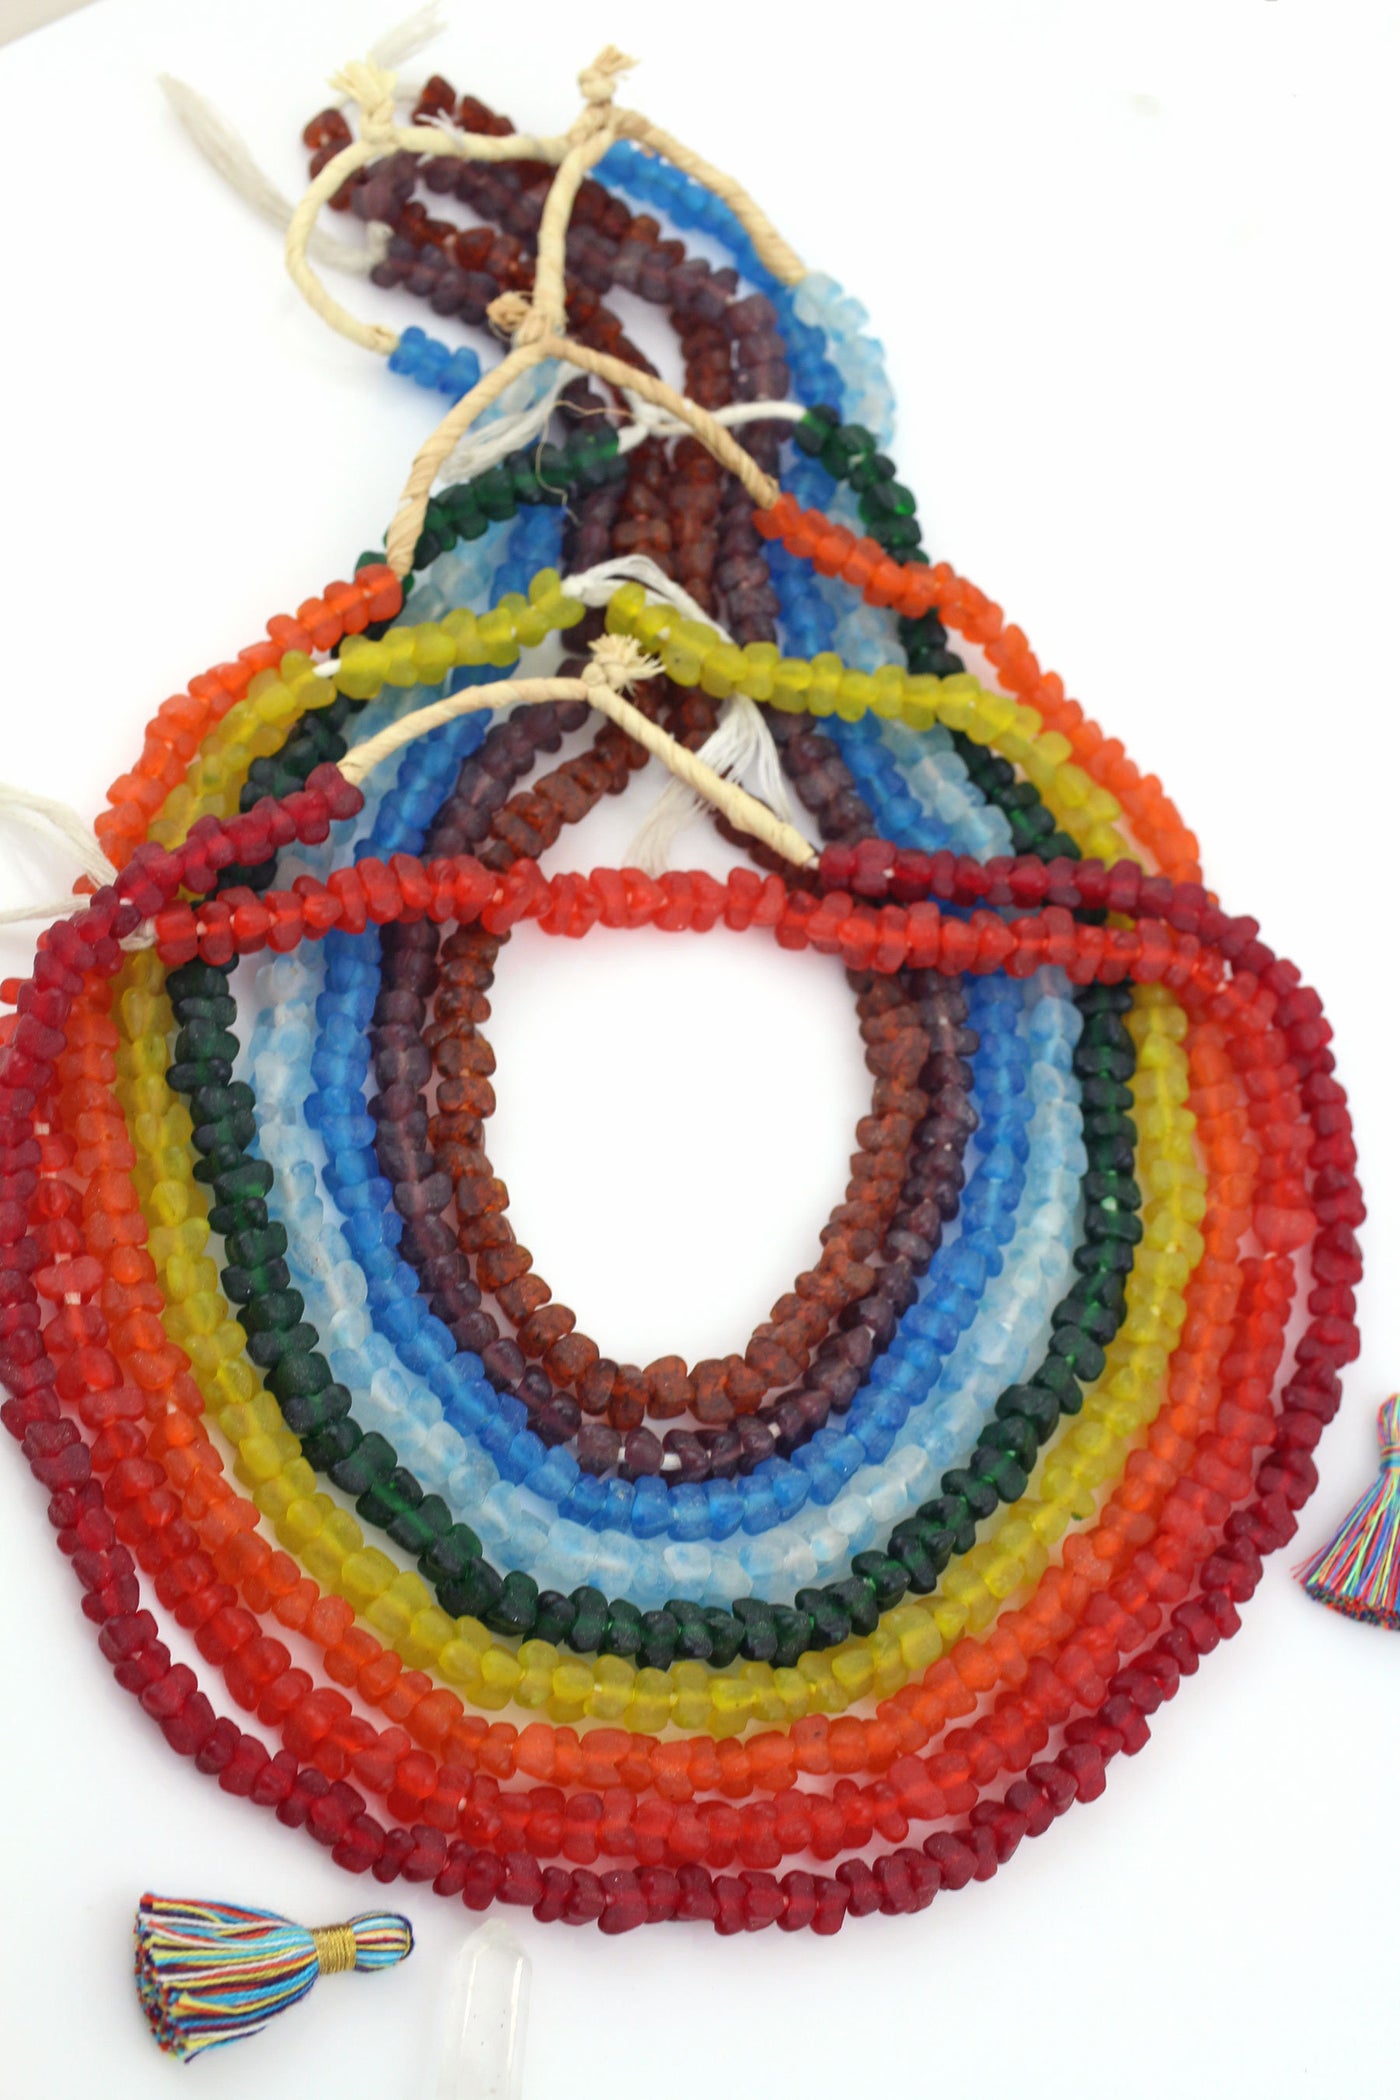 African Triangle: Geometric Recycled Ghana Glass Beads, 8-9mm, Assorted Rainbow Jewelry Supplies